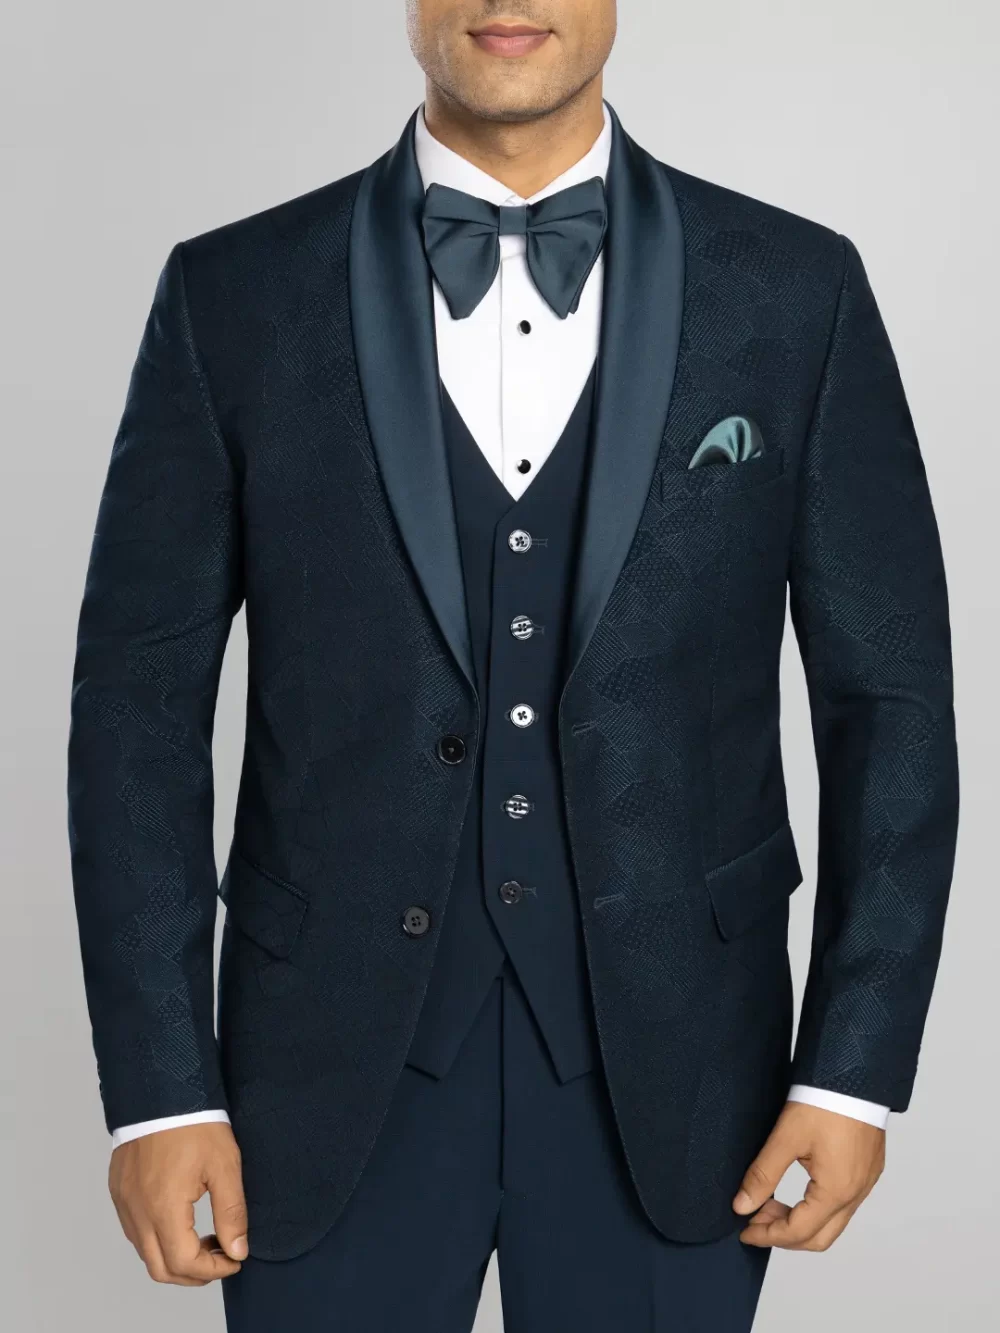 Teal Green Textured Tuxedo Suit